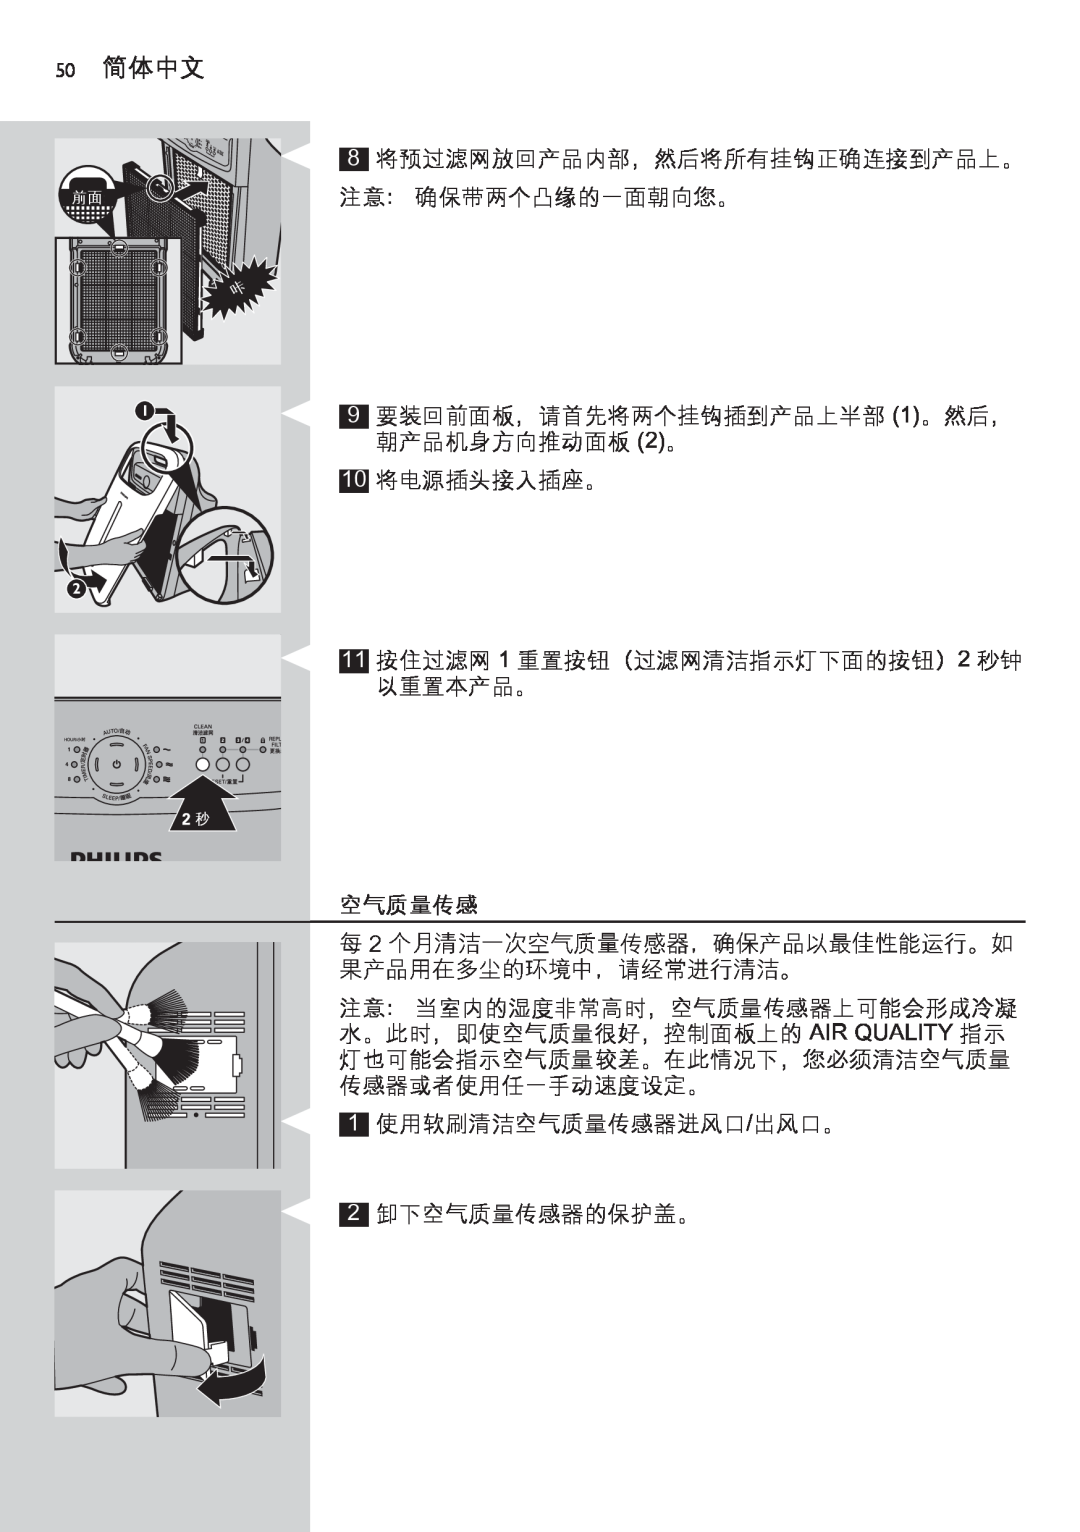 Philips AC4002 manual 50 简体中文, 空气质量传感 